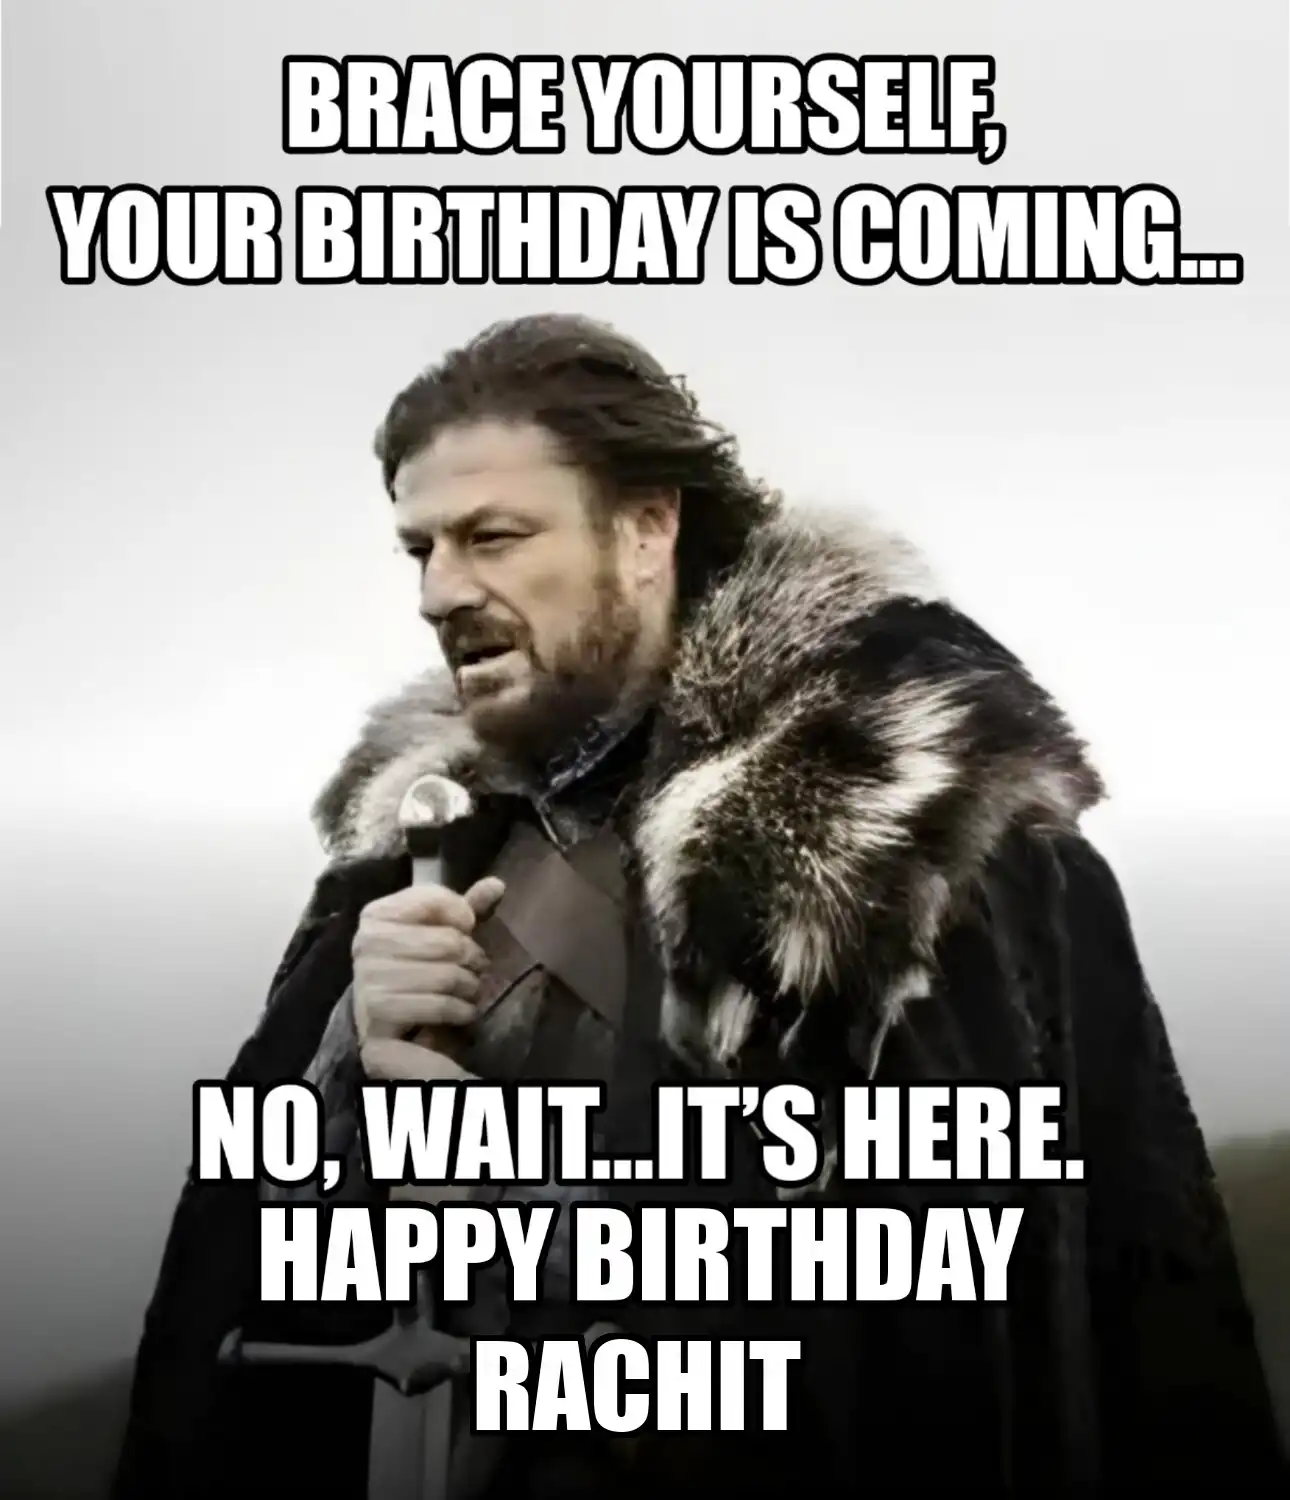 Happy Birthday Rachit Brace Yourself Your Birthday Is Coming Meme